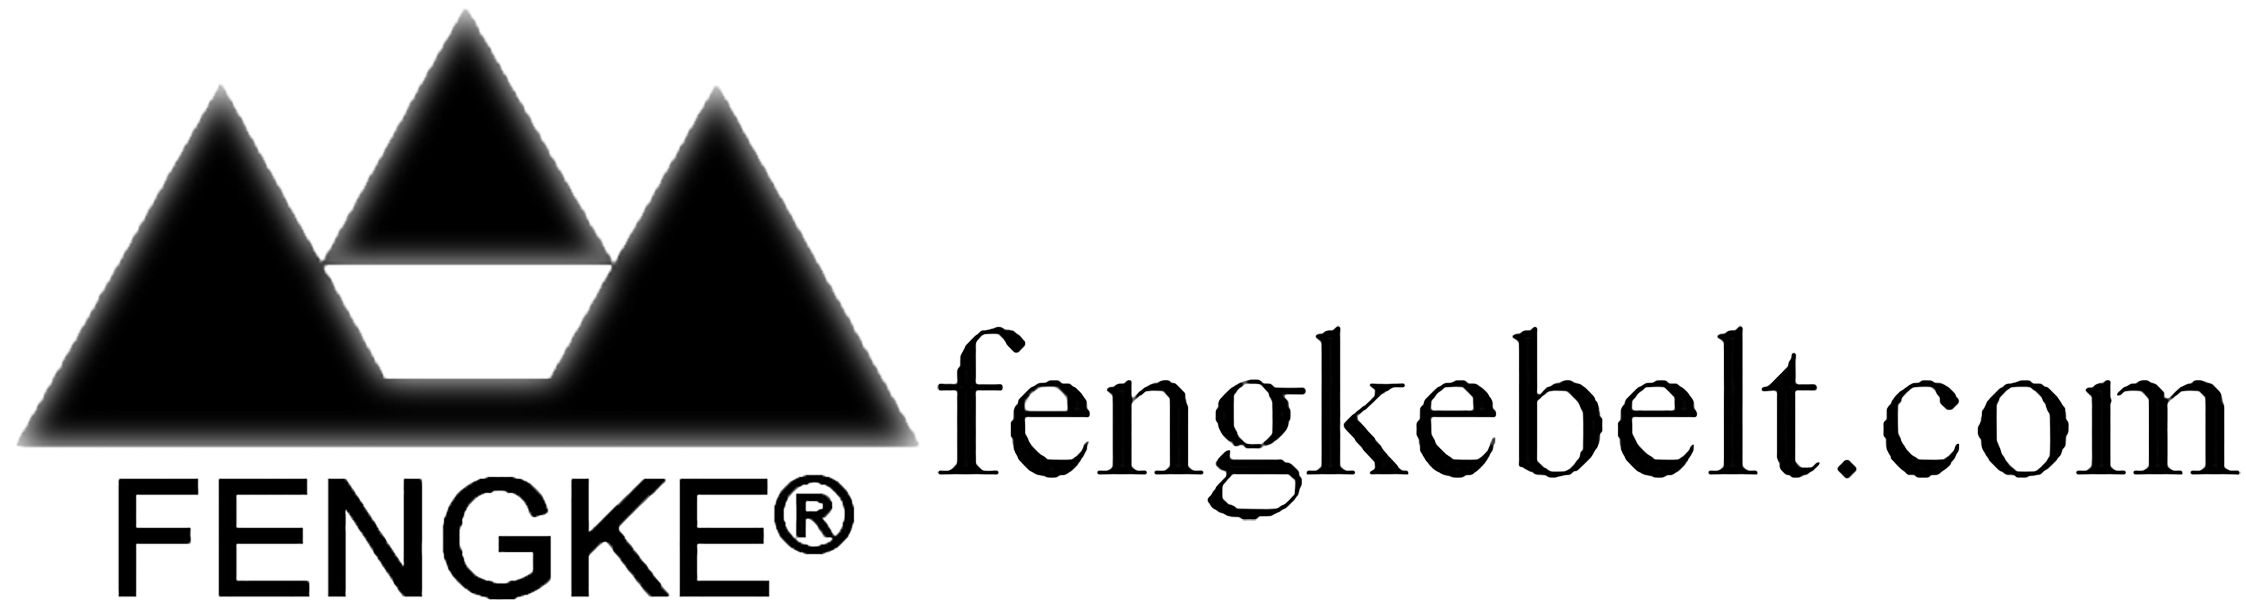 Fengke